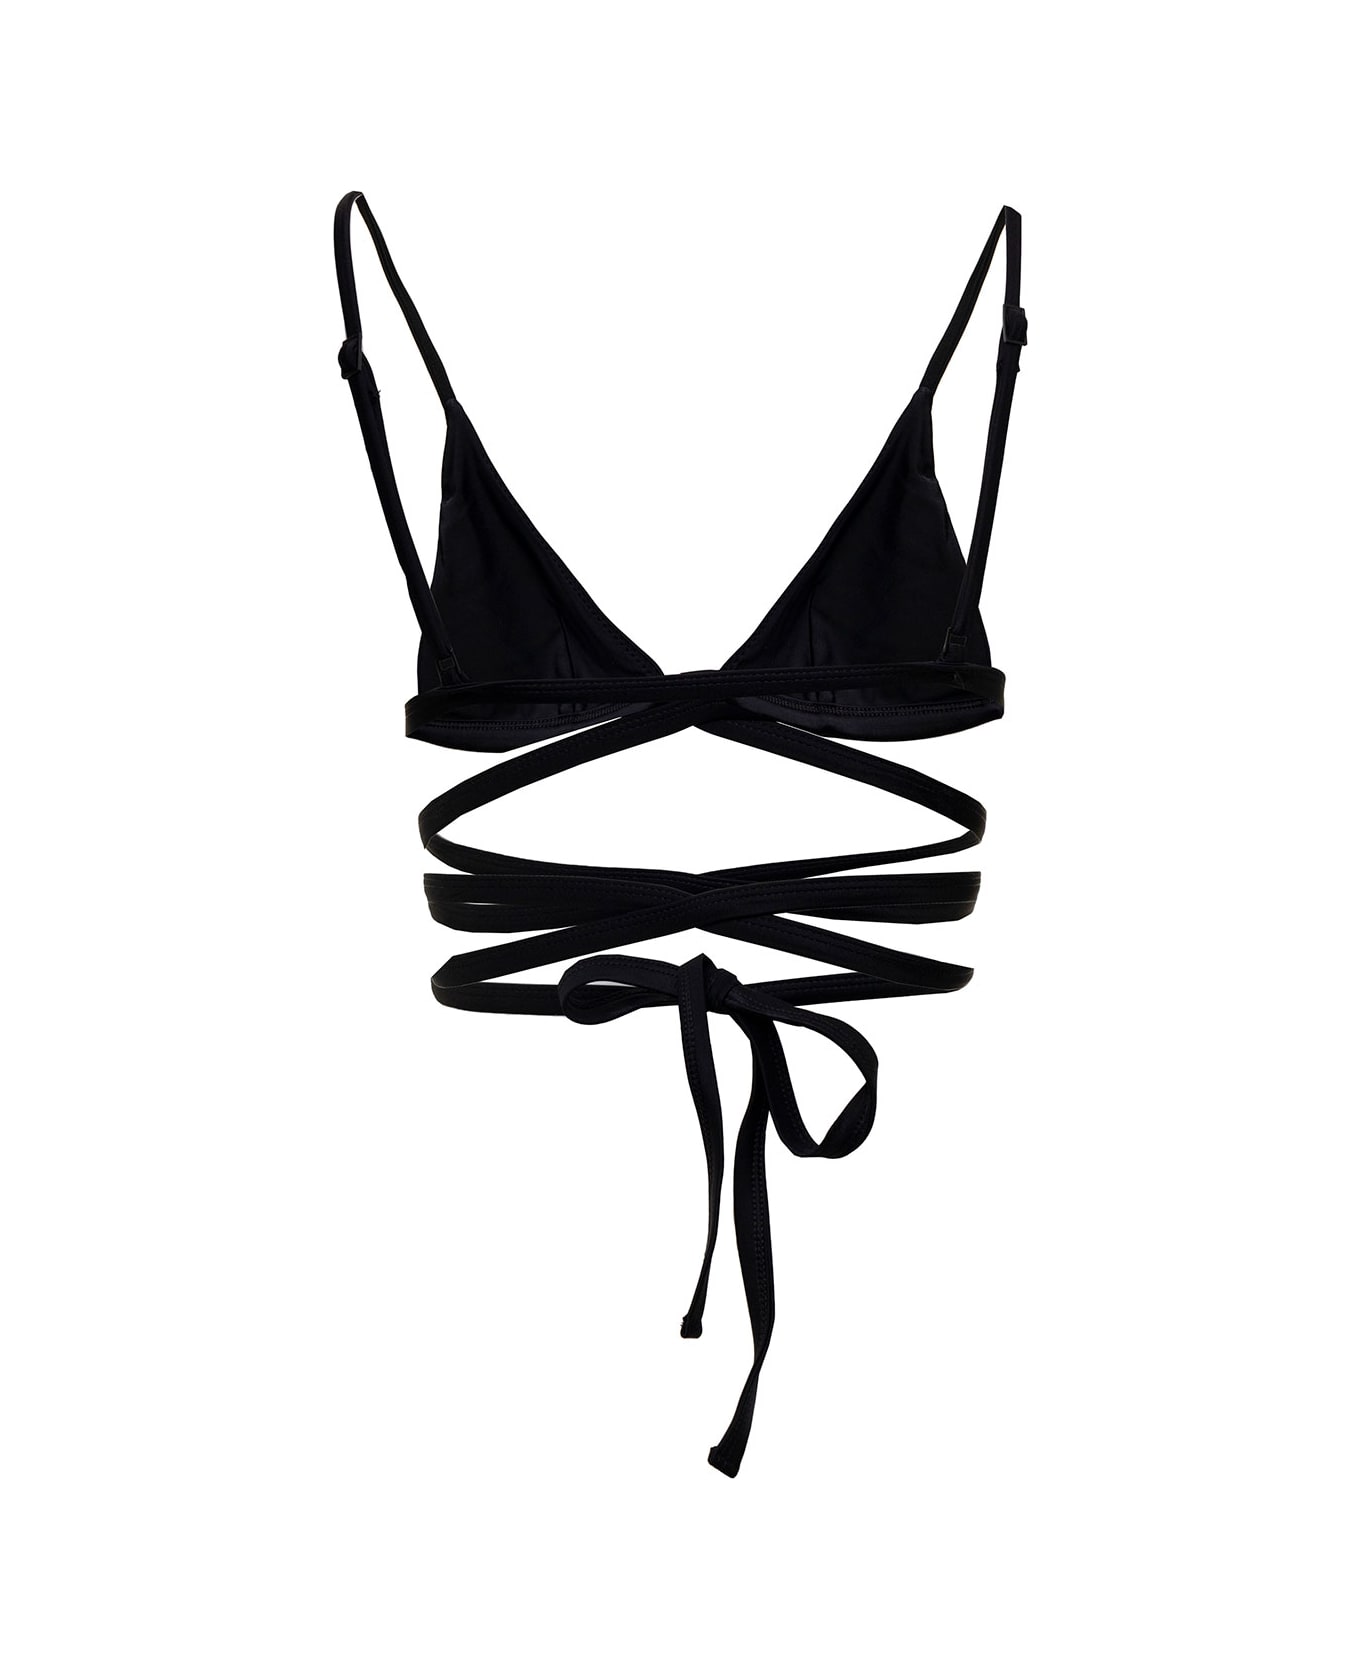 MATTEAU Woman's Black Nylon Bikini Top With Crossed Laces - Black 水着